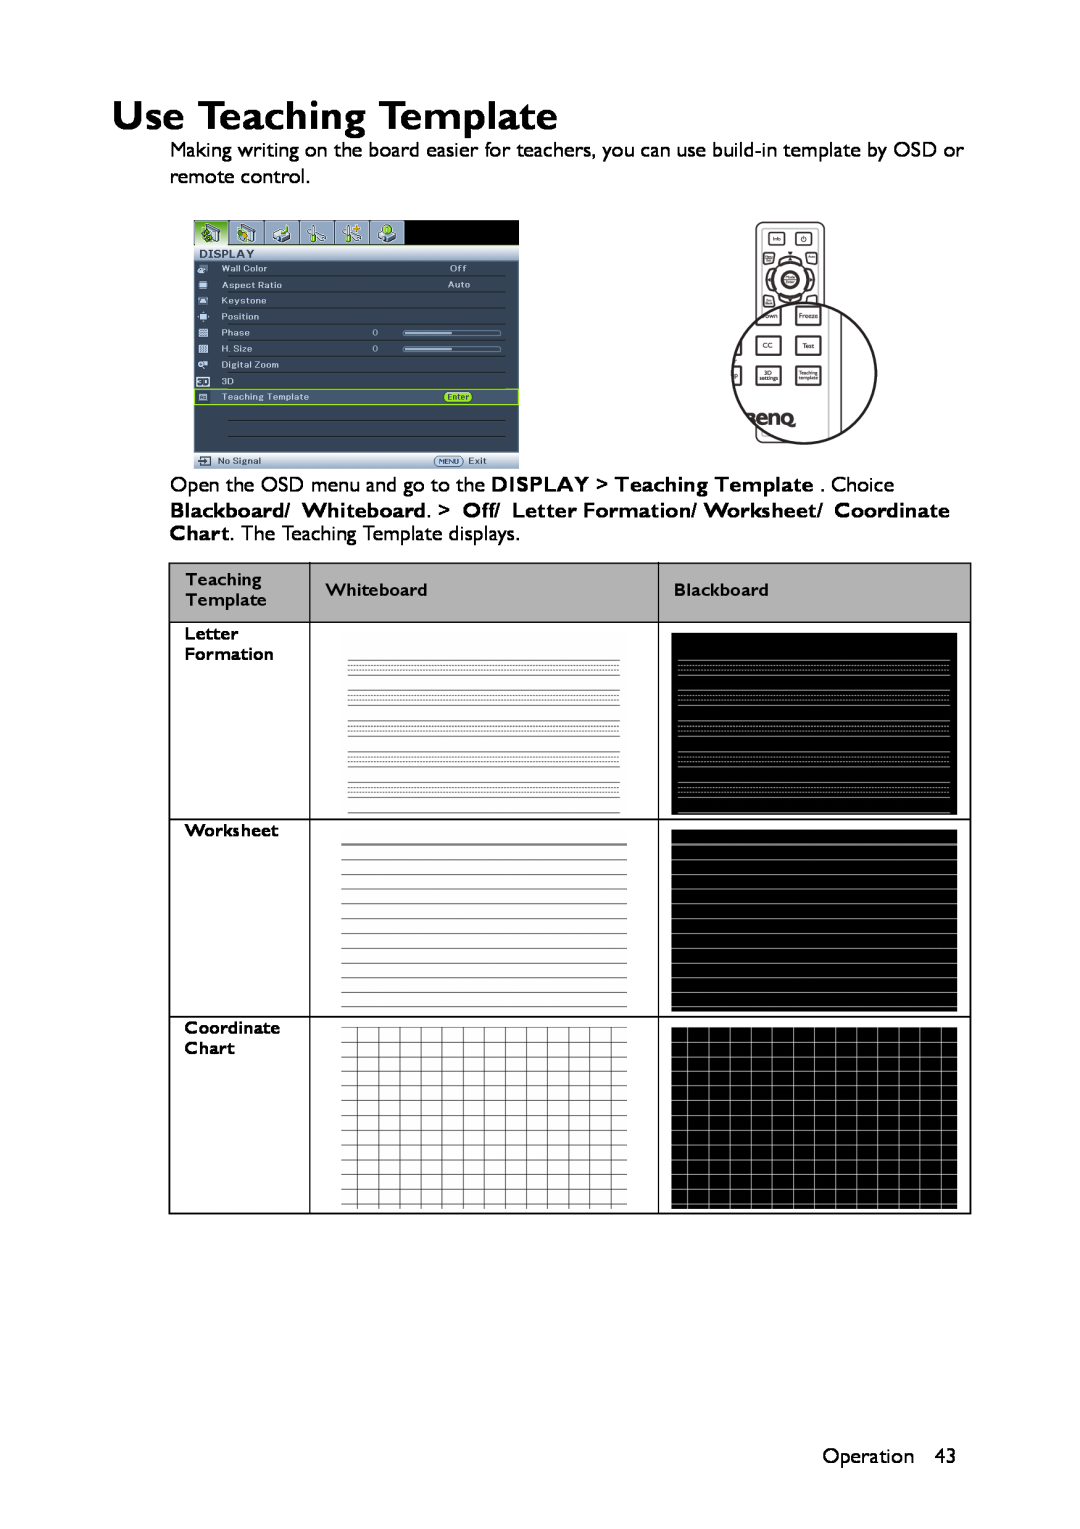 BenQ MS517 user manual Use Teaching Template, Whiteboard, Blackboard, Letter, Formation, Worksheet Coordinate Chart 